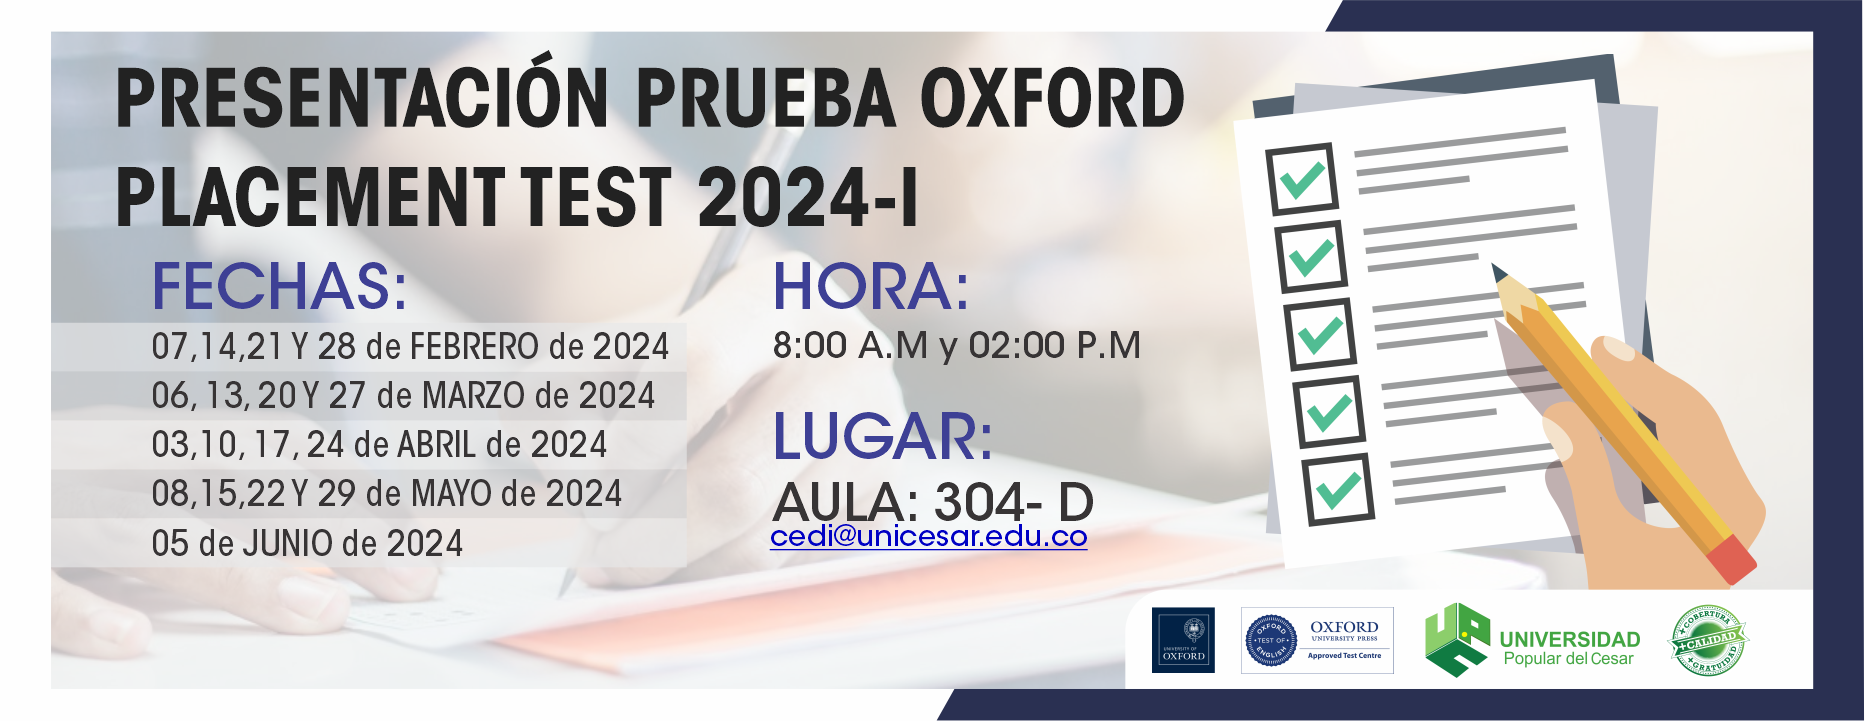 Banner PRESENTACION PRUEBA OXFORD PLACEMENT TEST 2024-I